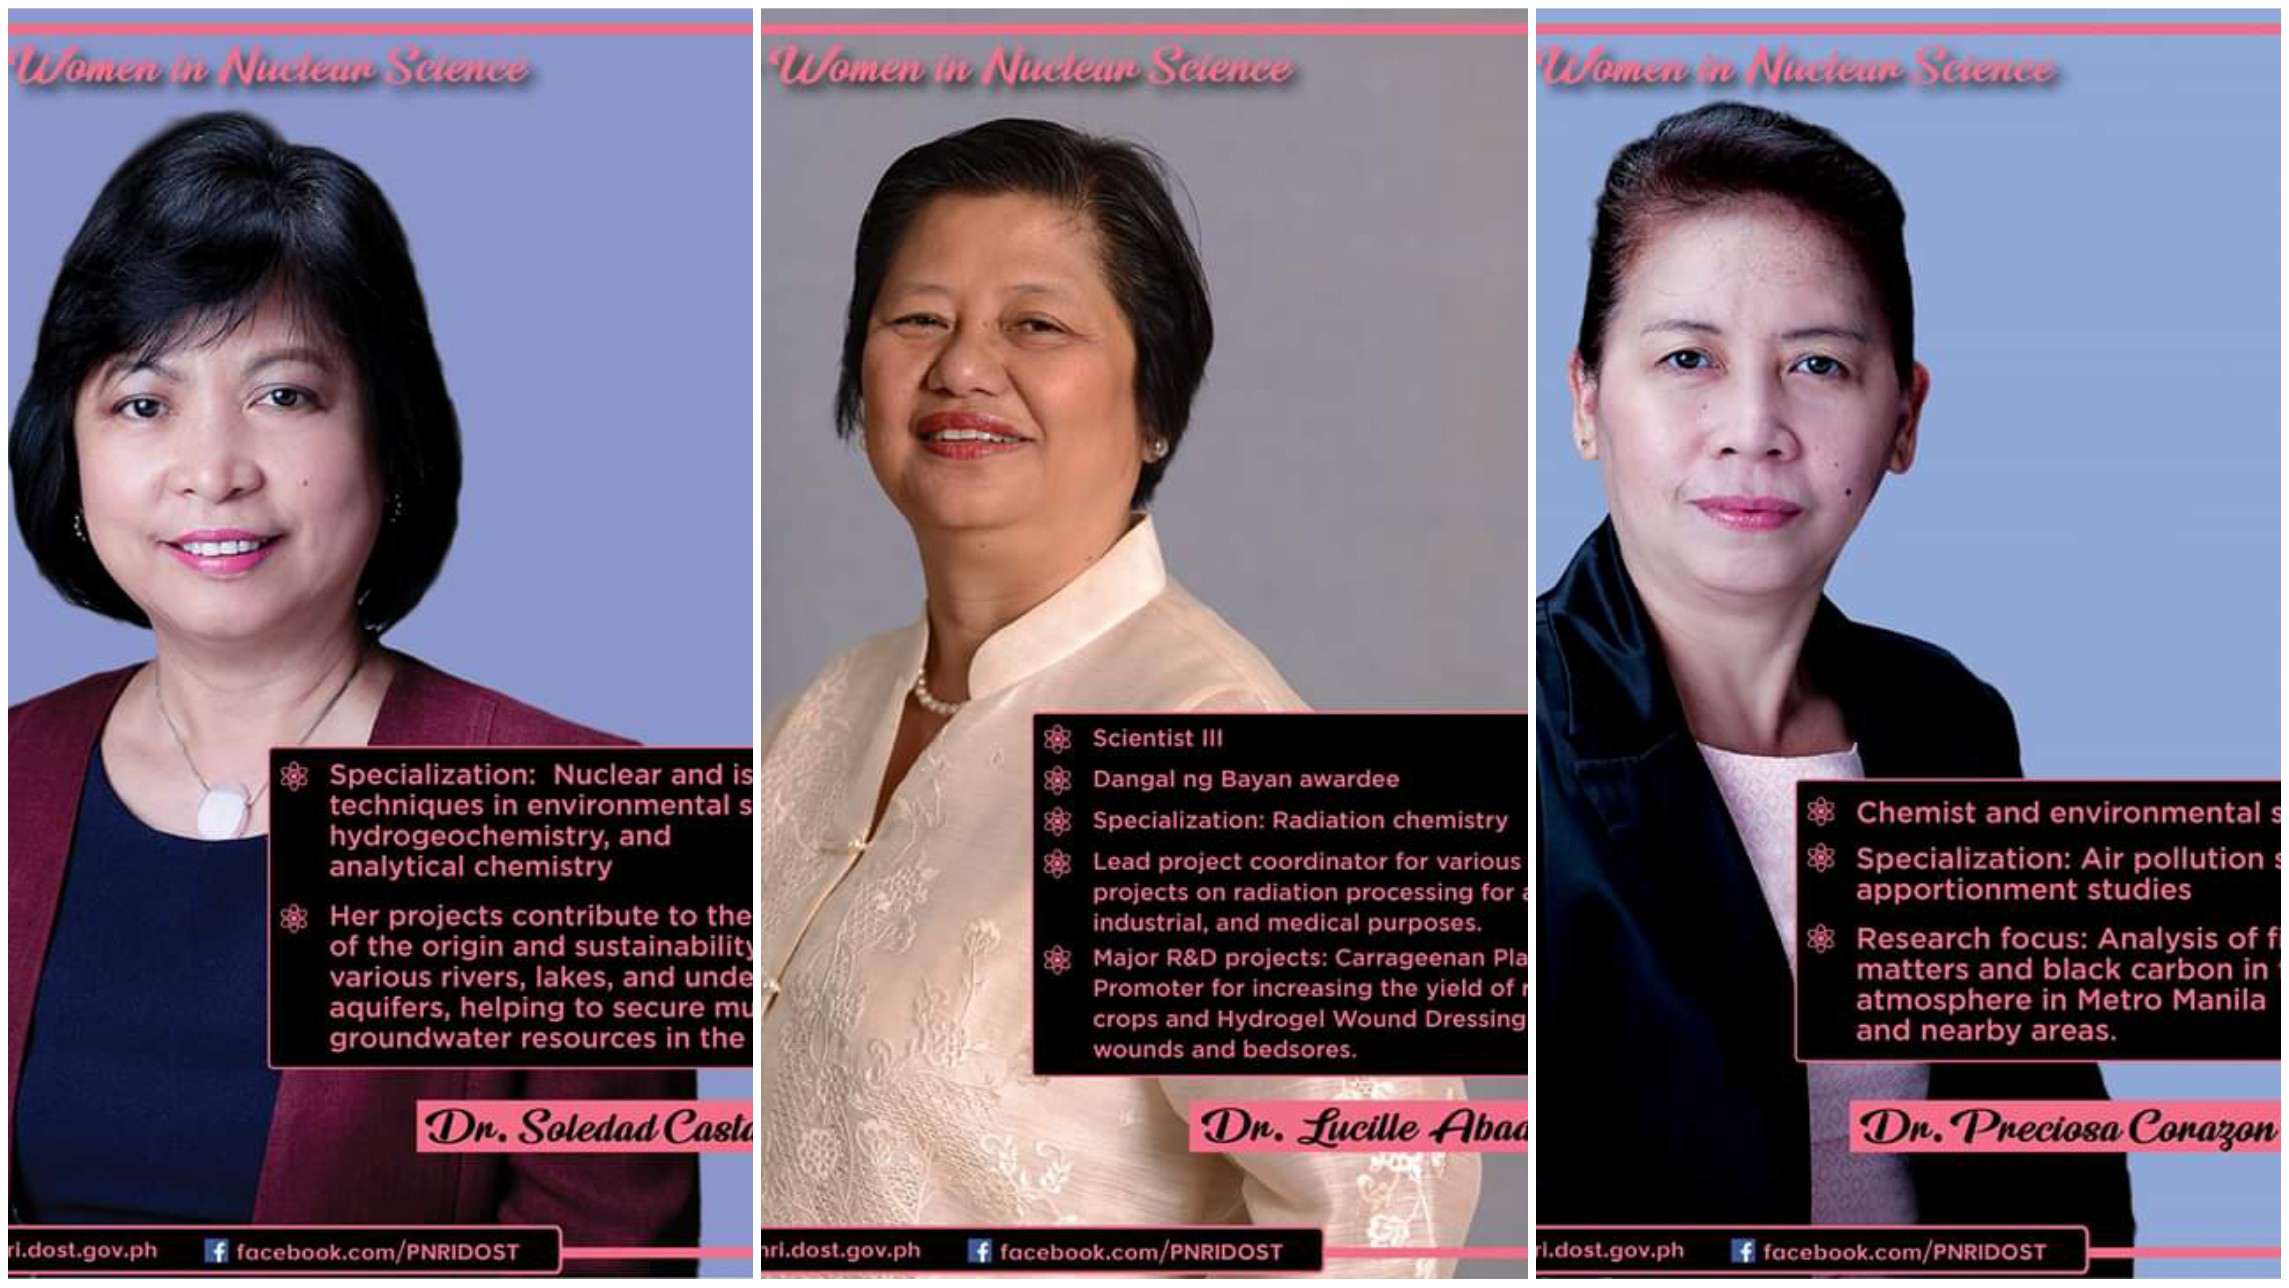 Filipino women nuclear scientists